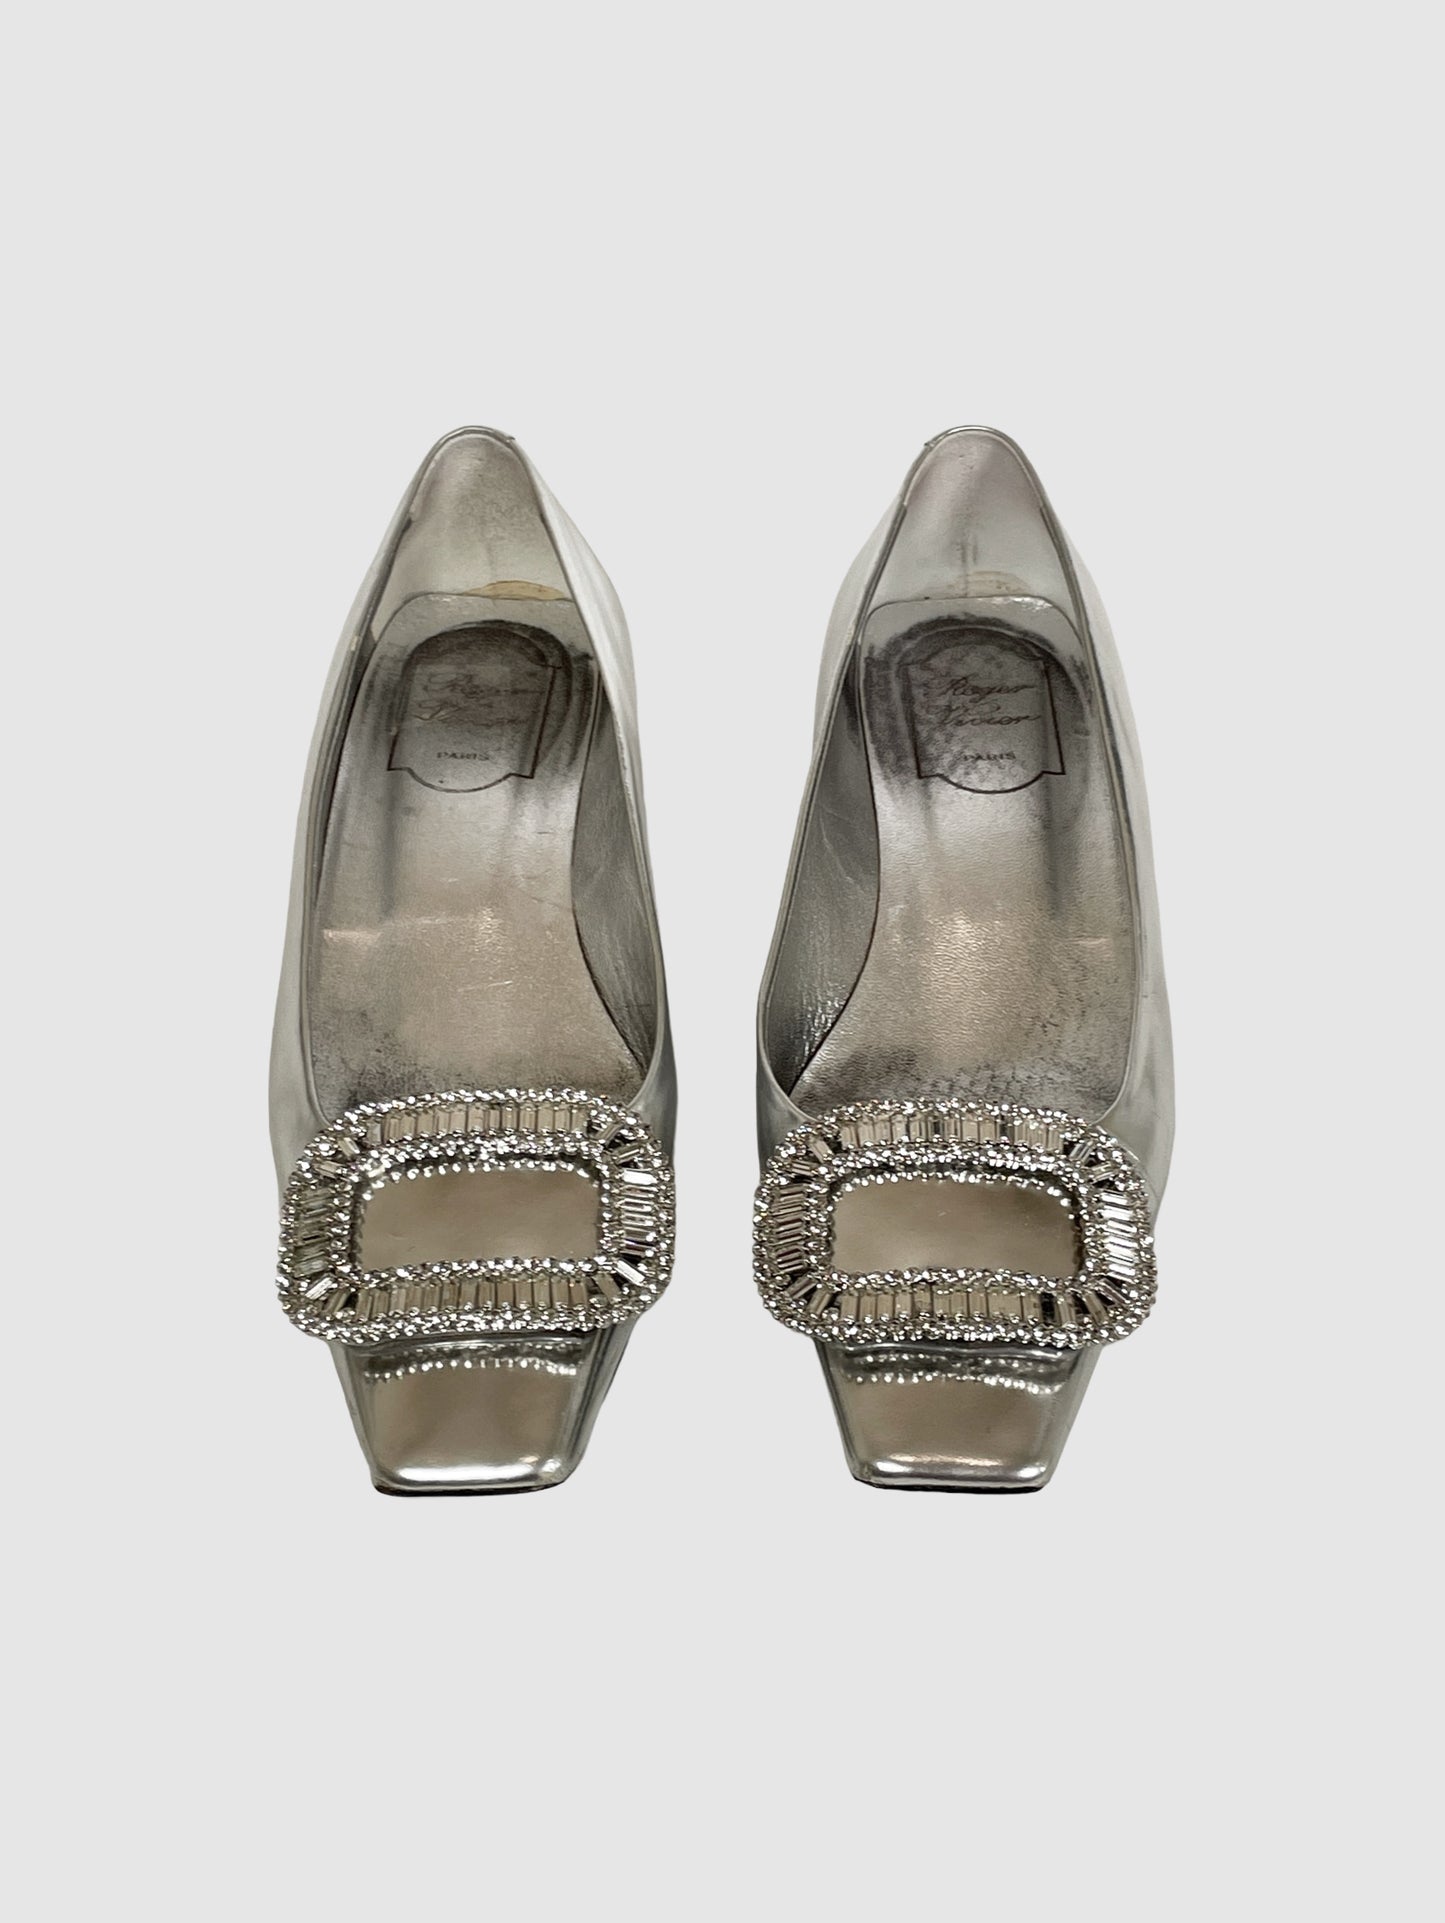 Metallic Ballerina Flats - Size 38.5